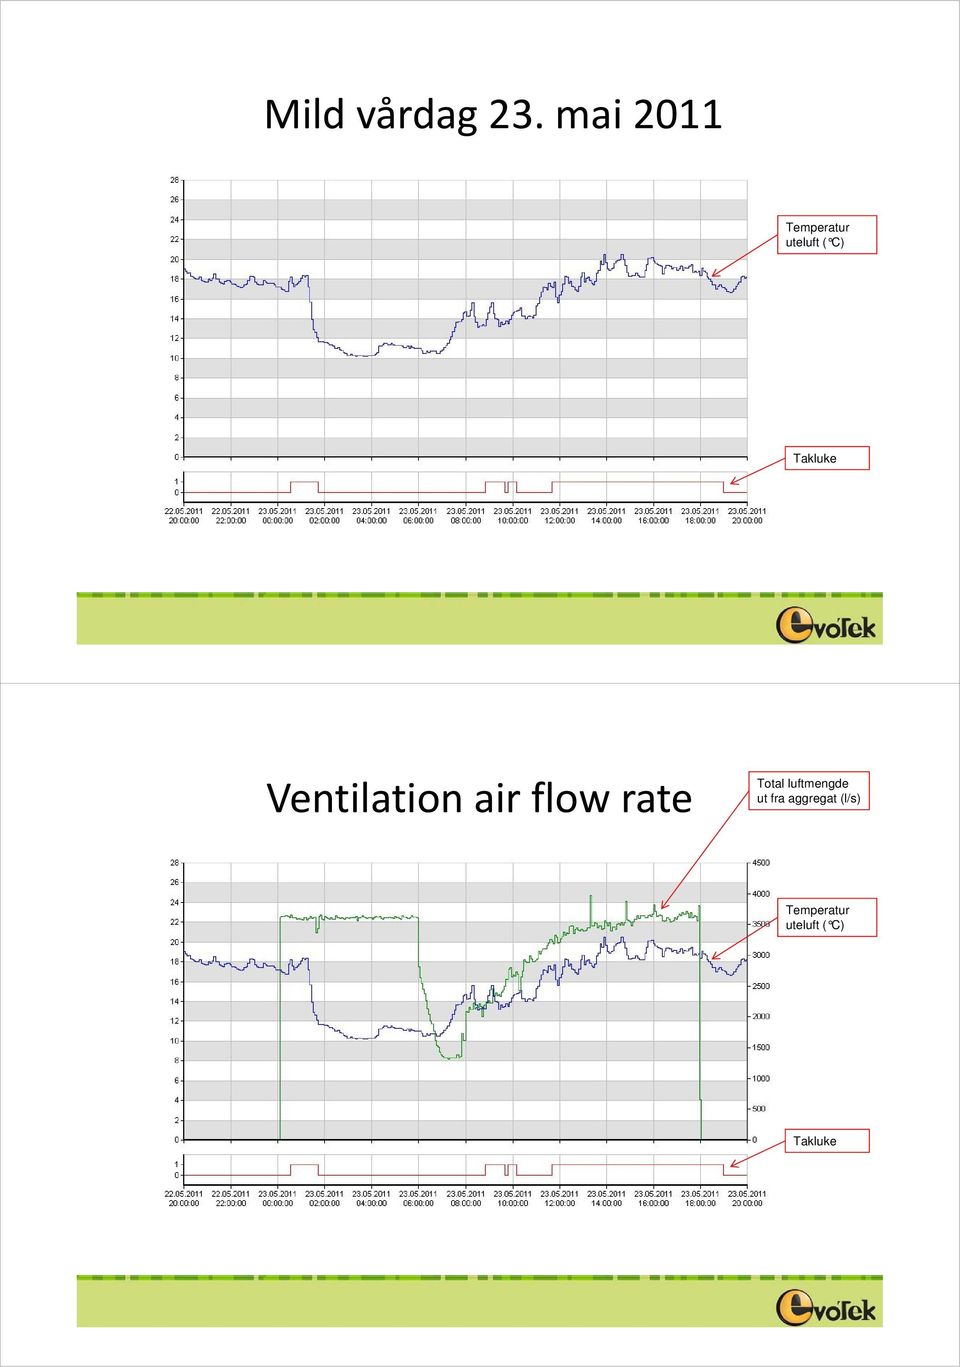 Takluke Ventilation air flow rate